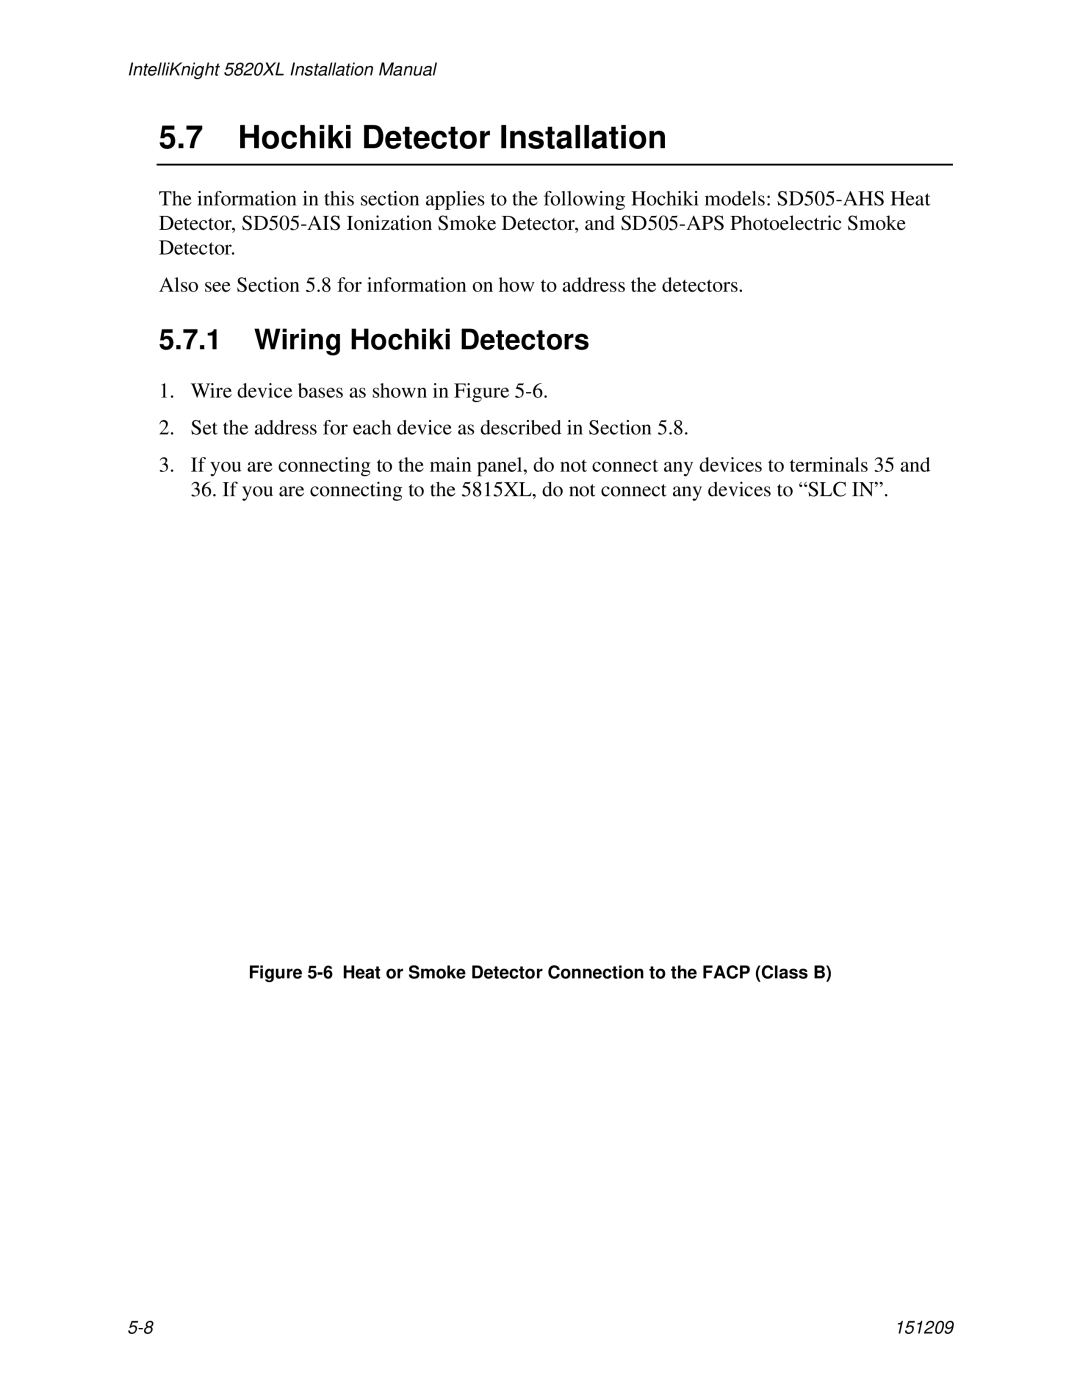 Honeywell 5820XL manual Hochiki Detector Installation, Wiring Hochiki Detectors 